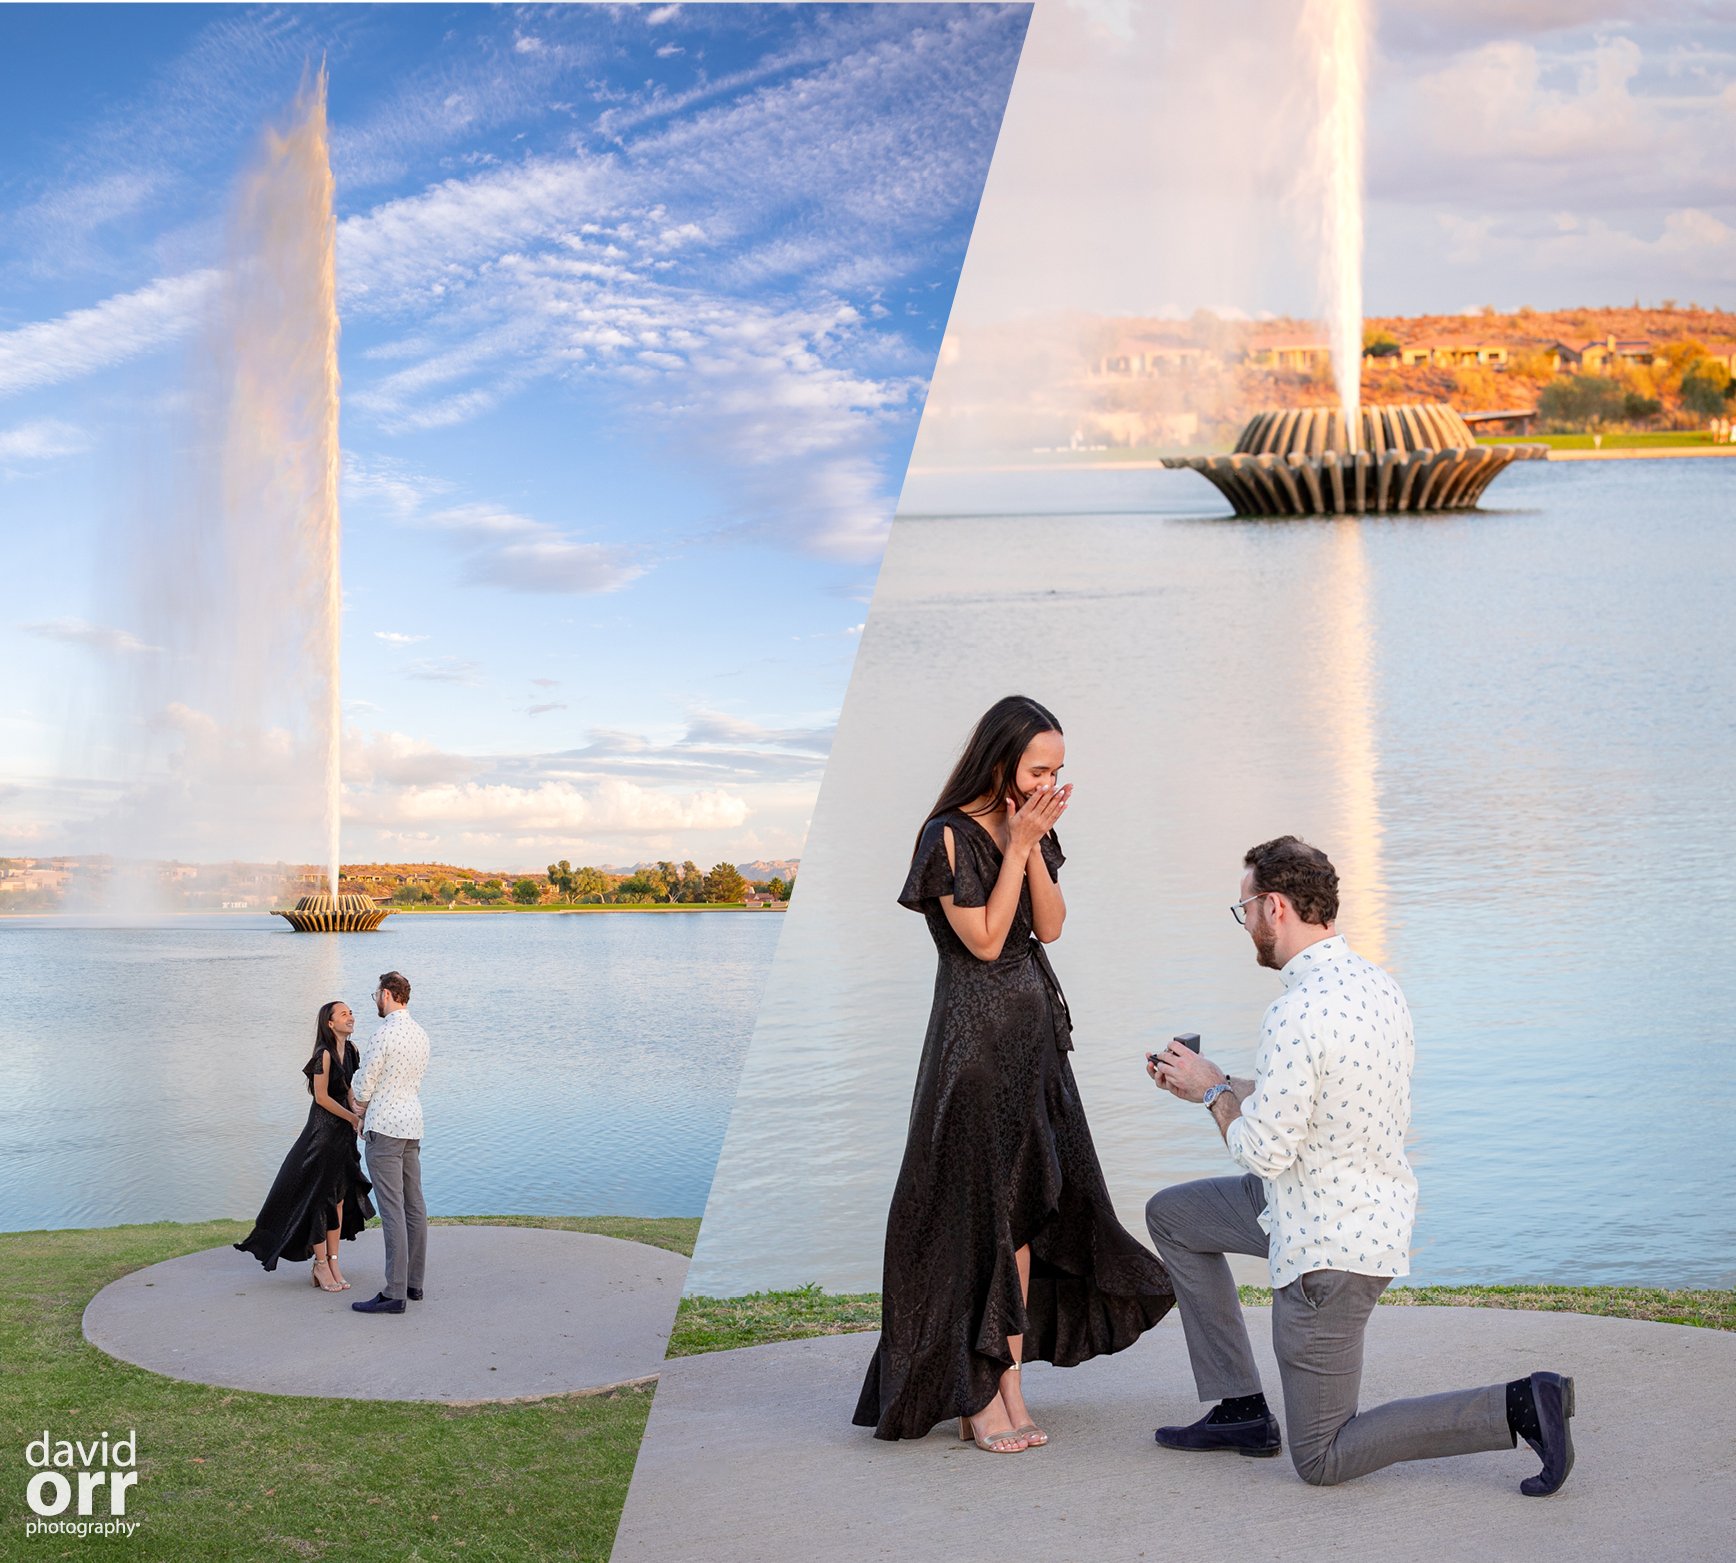 David-Orr-Photography_Fountain-Hills-Arizona-Proposals-Engagements.jpg